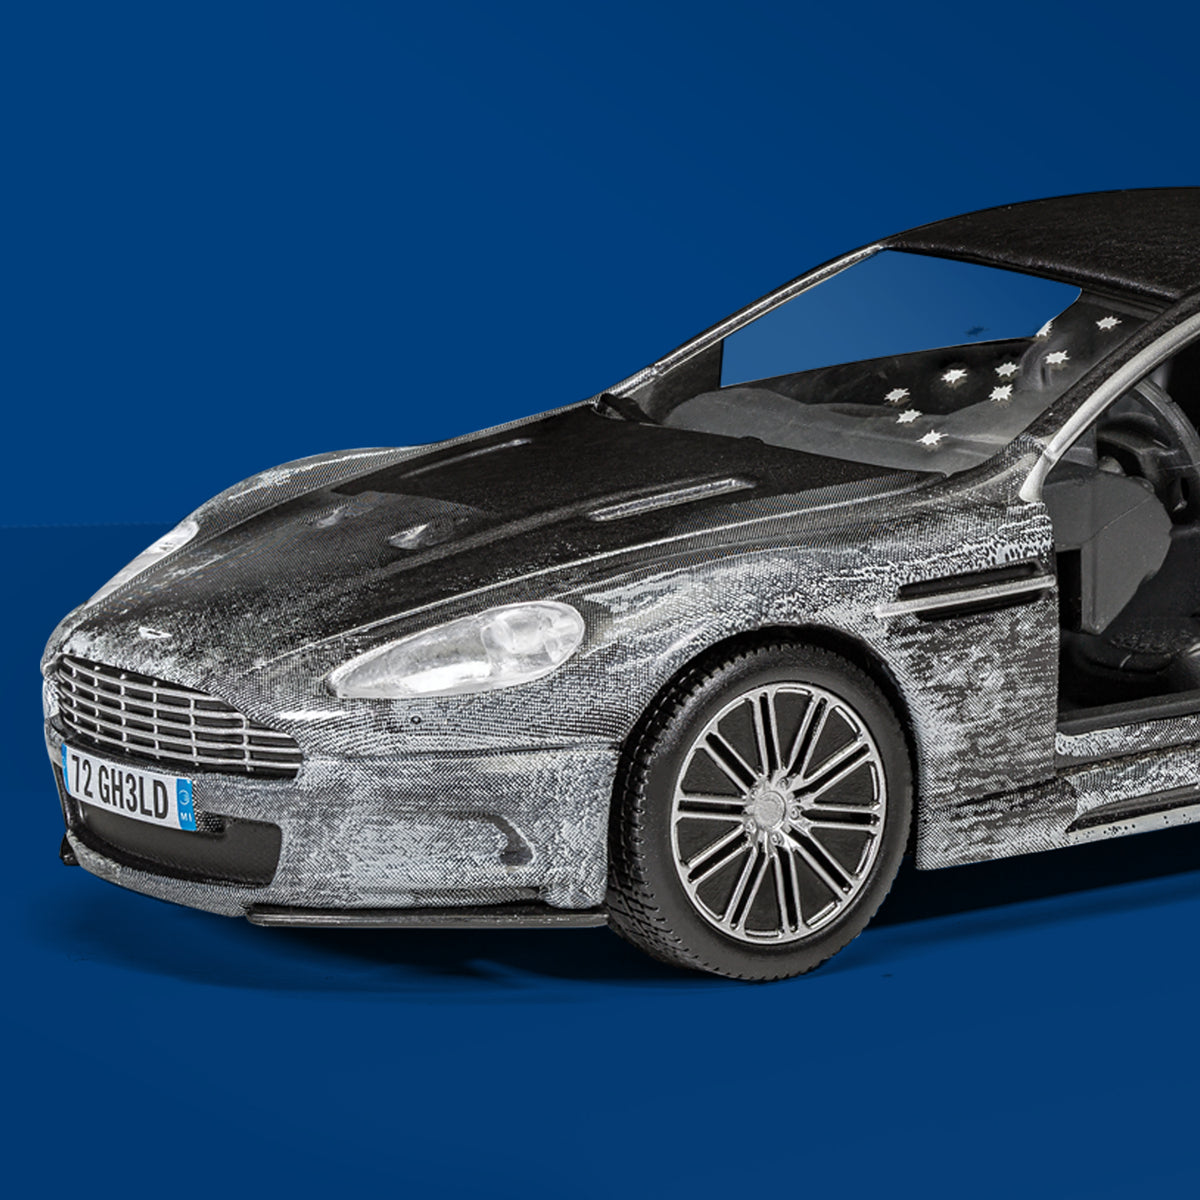 James Bond Damaged Aston Martin DBS Model Car - Quantum Of Solace Edition - By Corgi